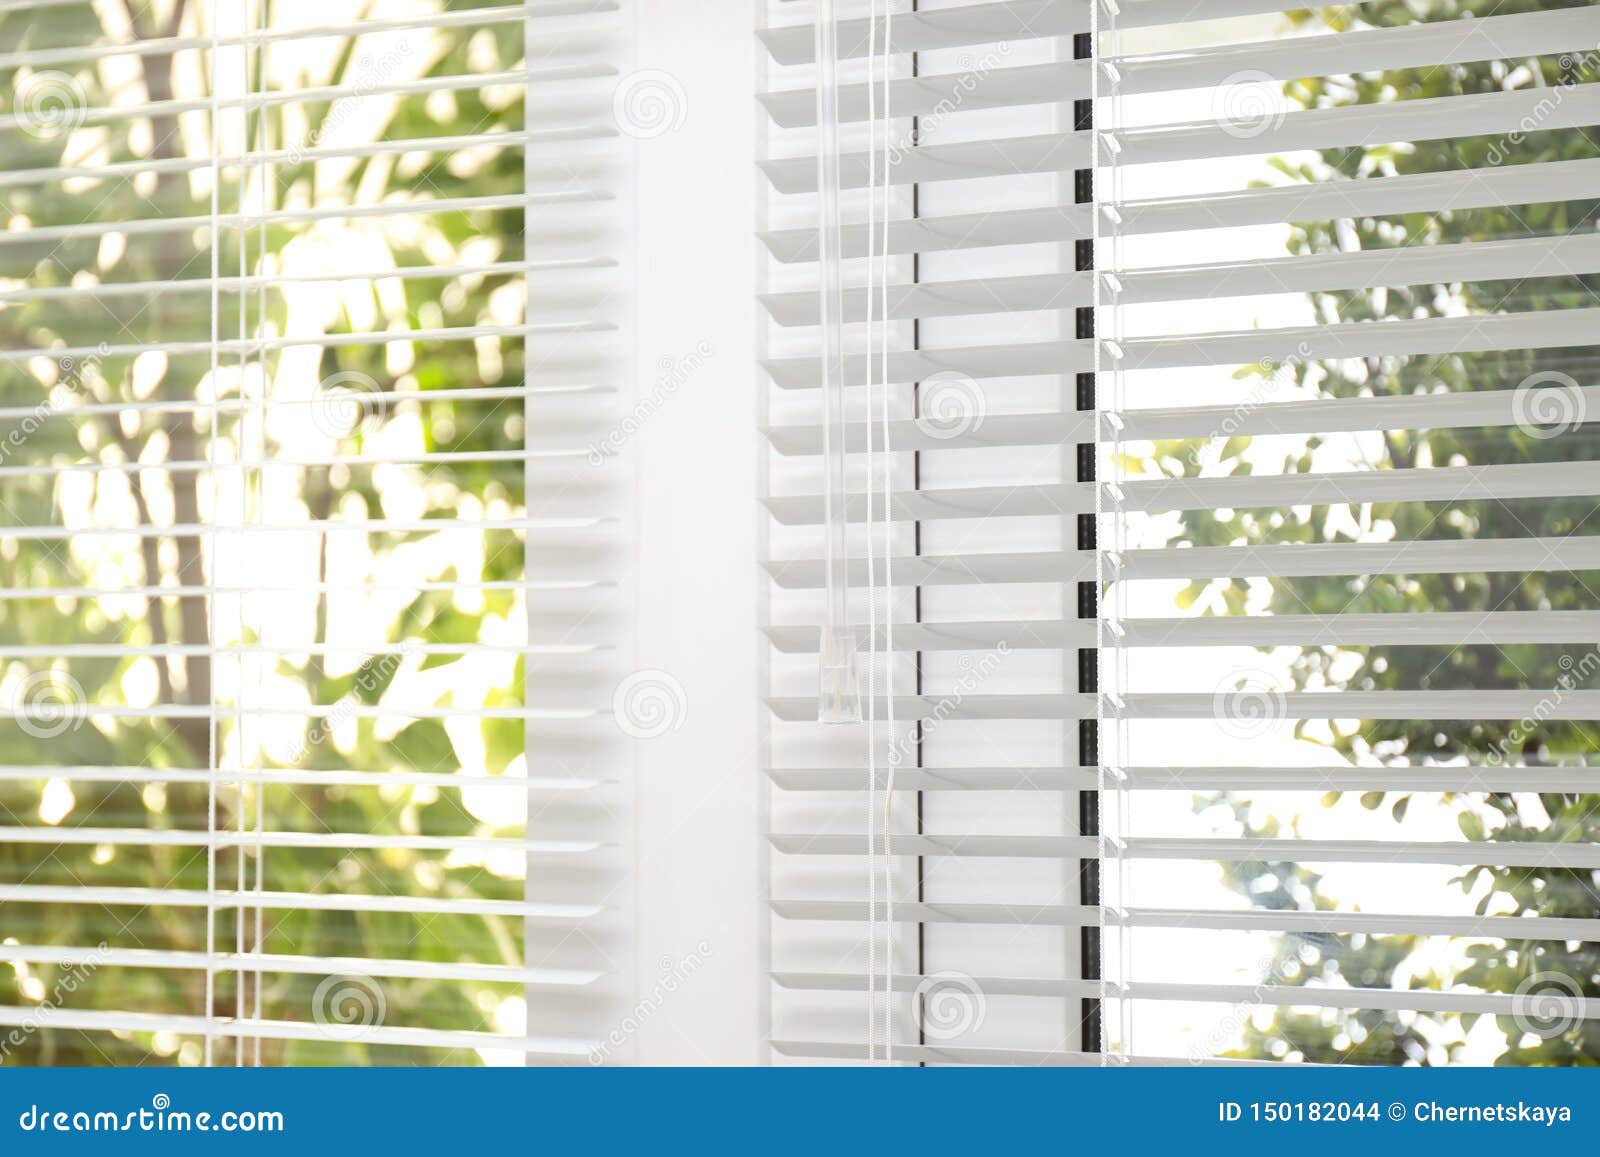 Open White Horizontal Window Blinds Stock Photo - Image of open, blinds ...